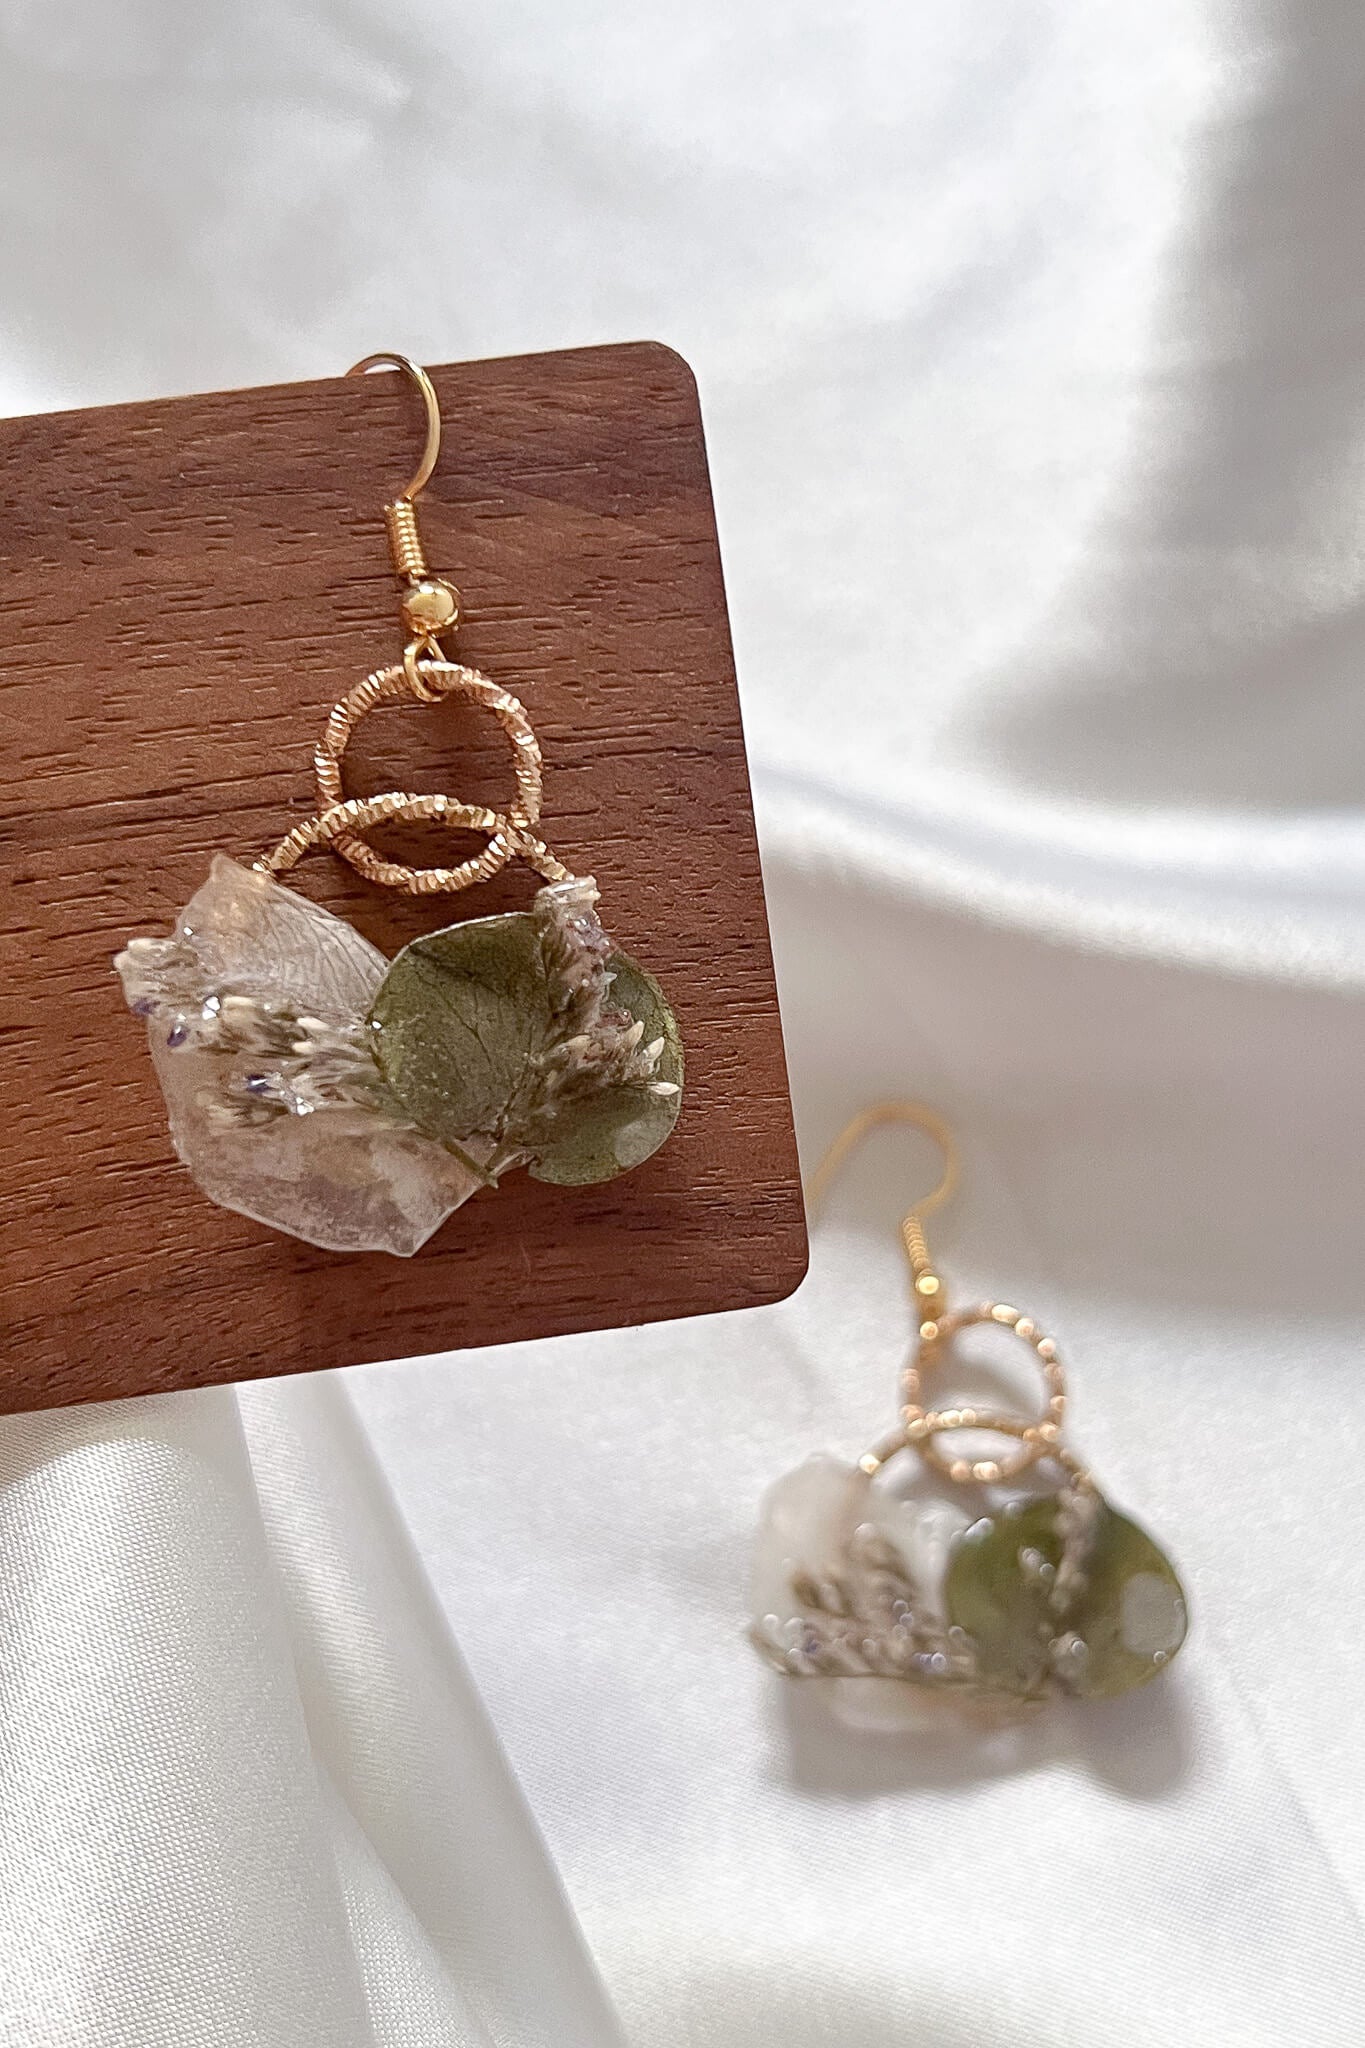 Handmade resin dangle earrings with dried preserved flowers